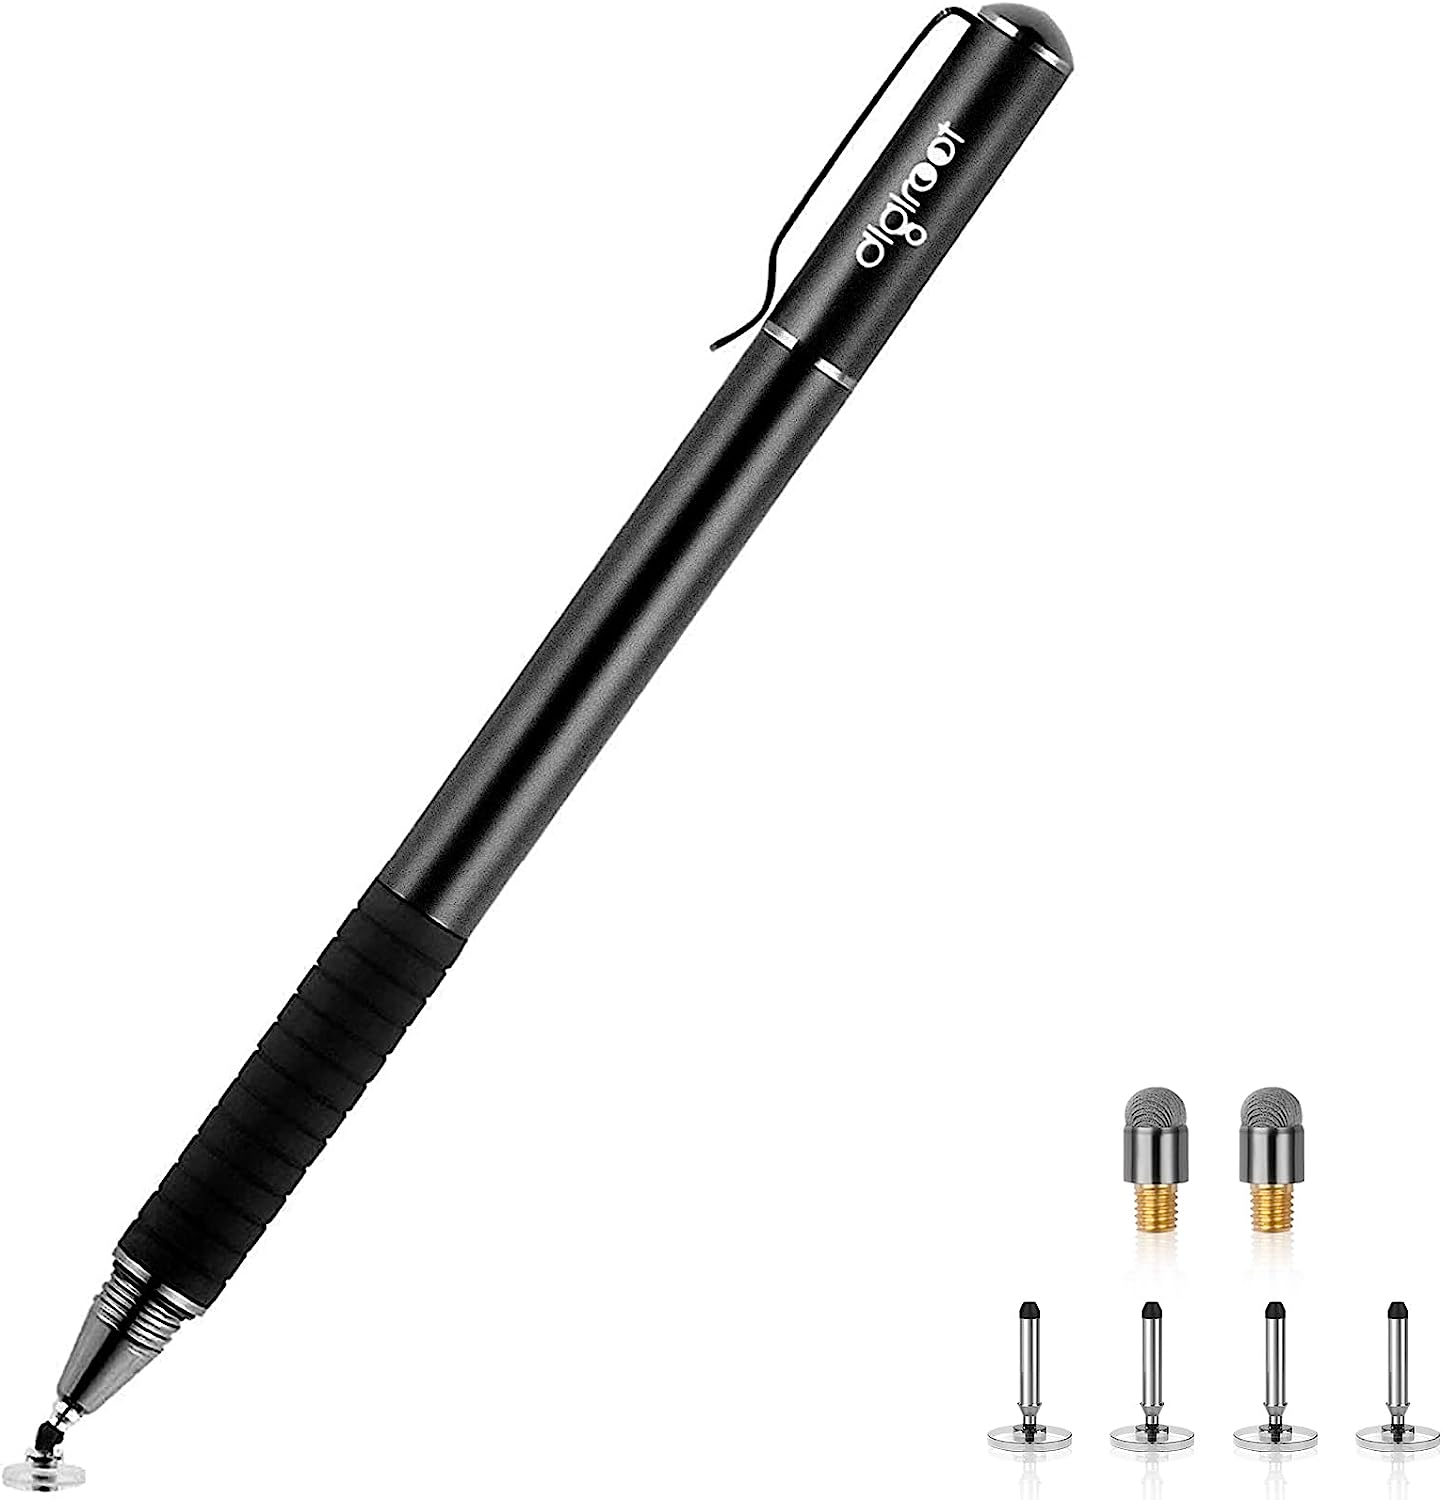 stylus pen for touch screen laptop comparison table